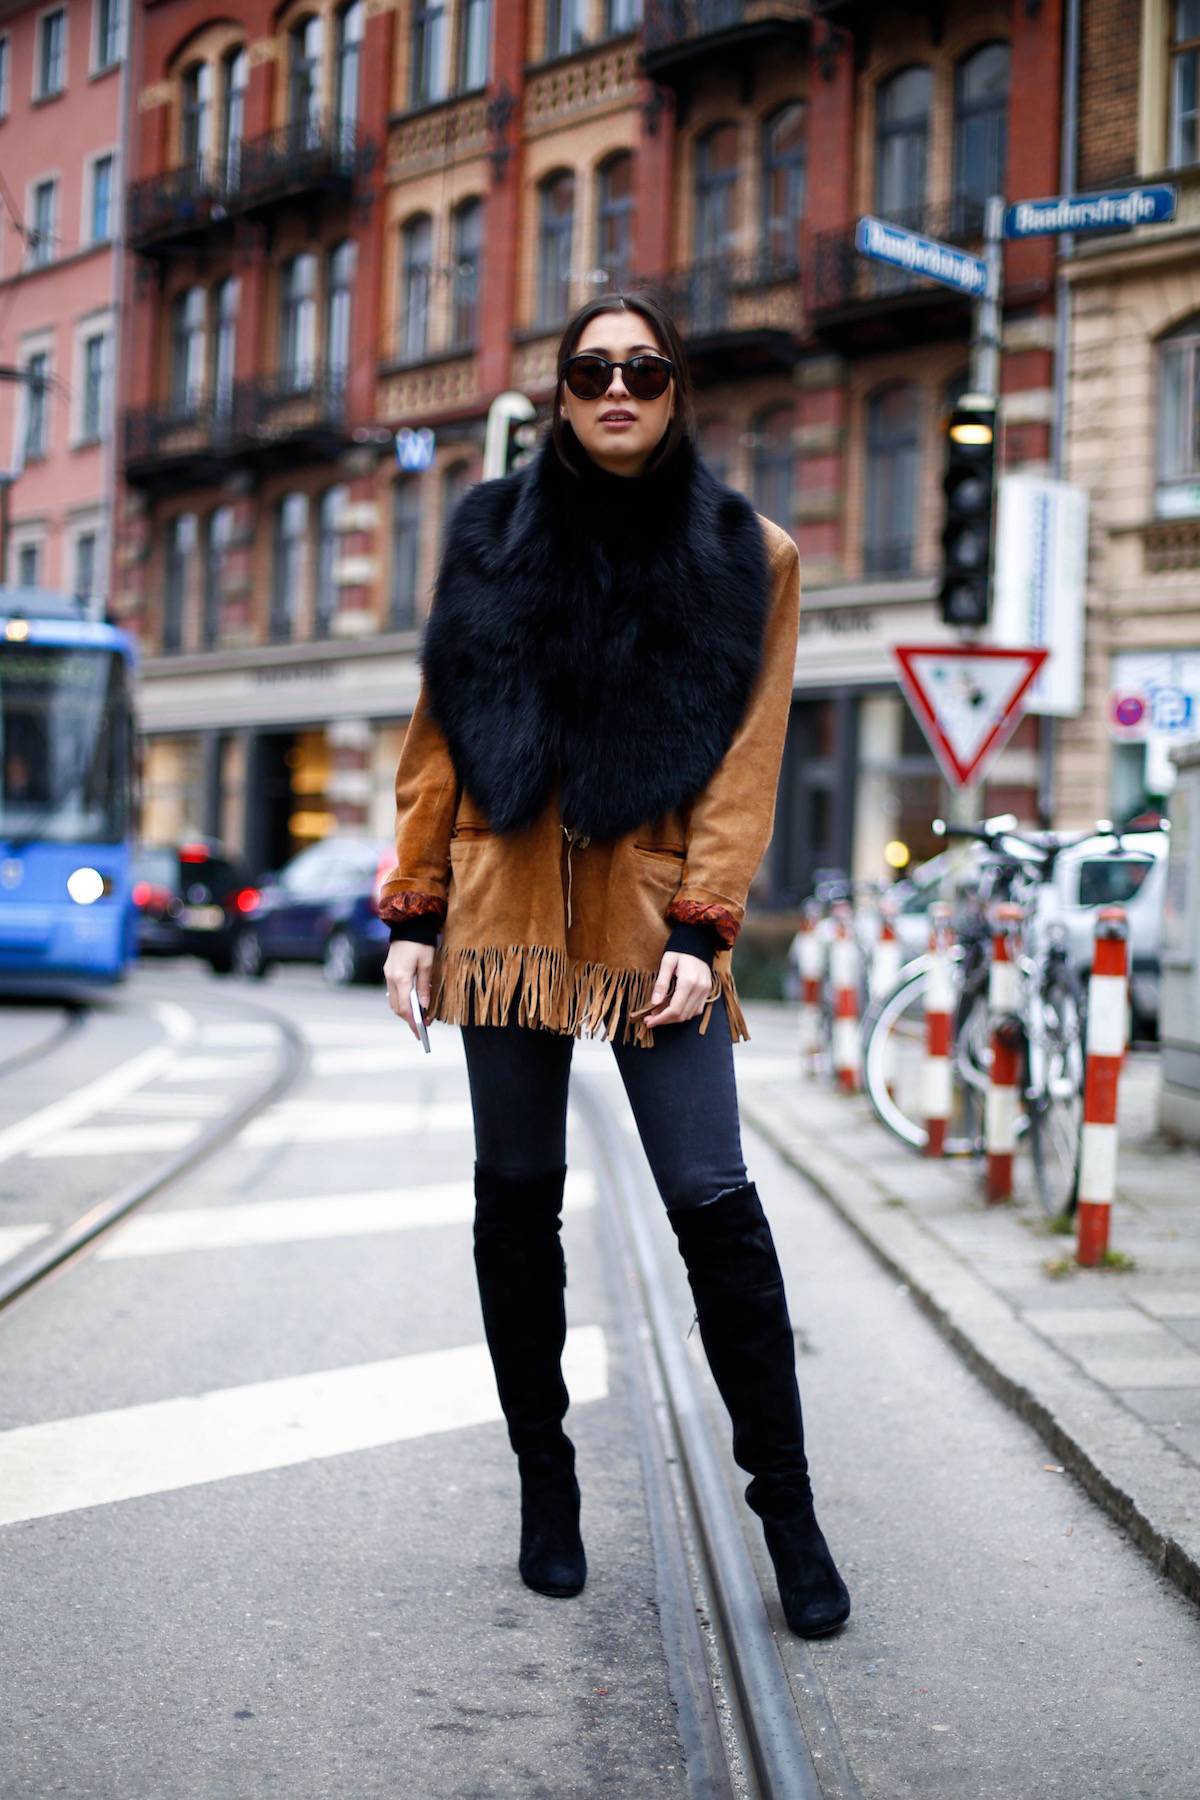 Fringed Jacket - Suede Leather - Vintage - Luxury - Overknees - Fur - Calvin Klein Sunnies - Fashionista - German Fashionblogger - Ootd - Streetstyle Munich - München Personal Style Blog - Isartor - Trends 2016